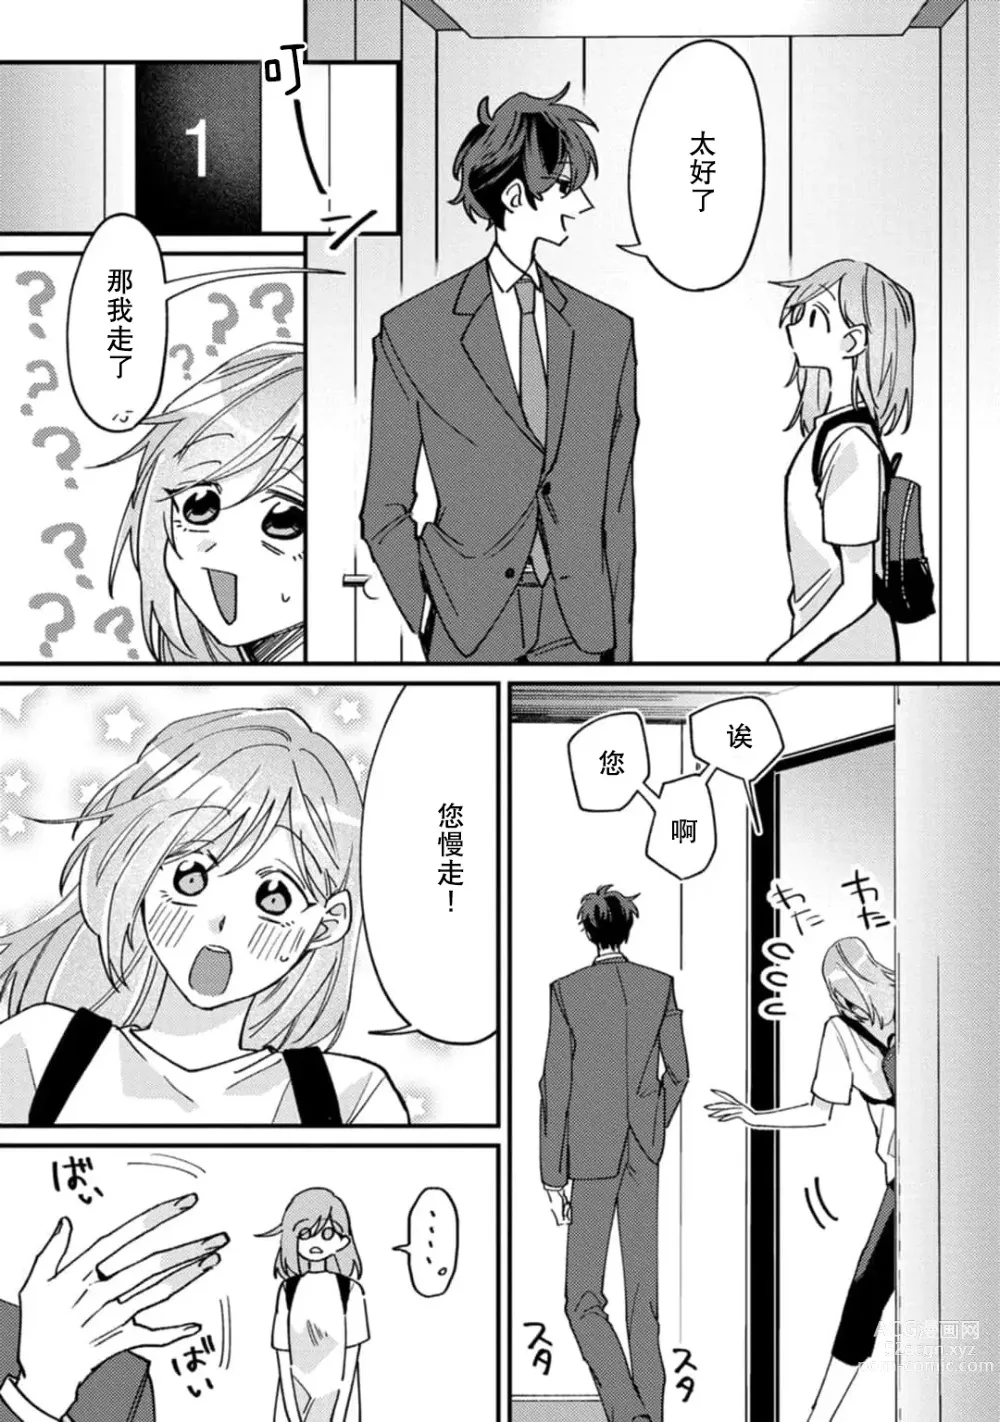 Page 13 of manga 请勿打扰！酒店客房服务员被常客绅士夺走第一次 1-3